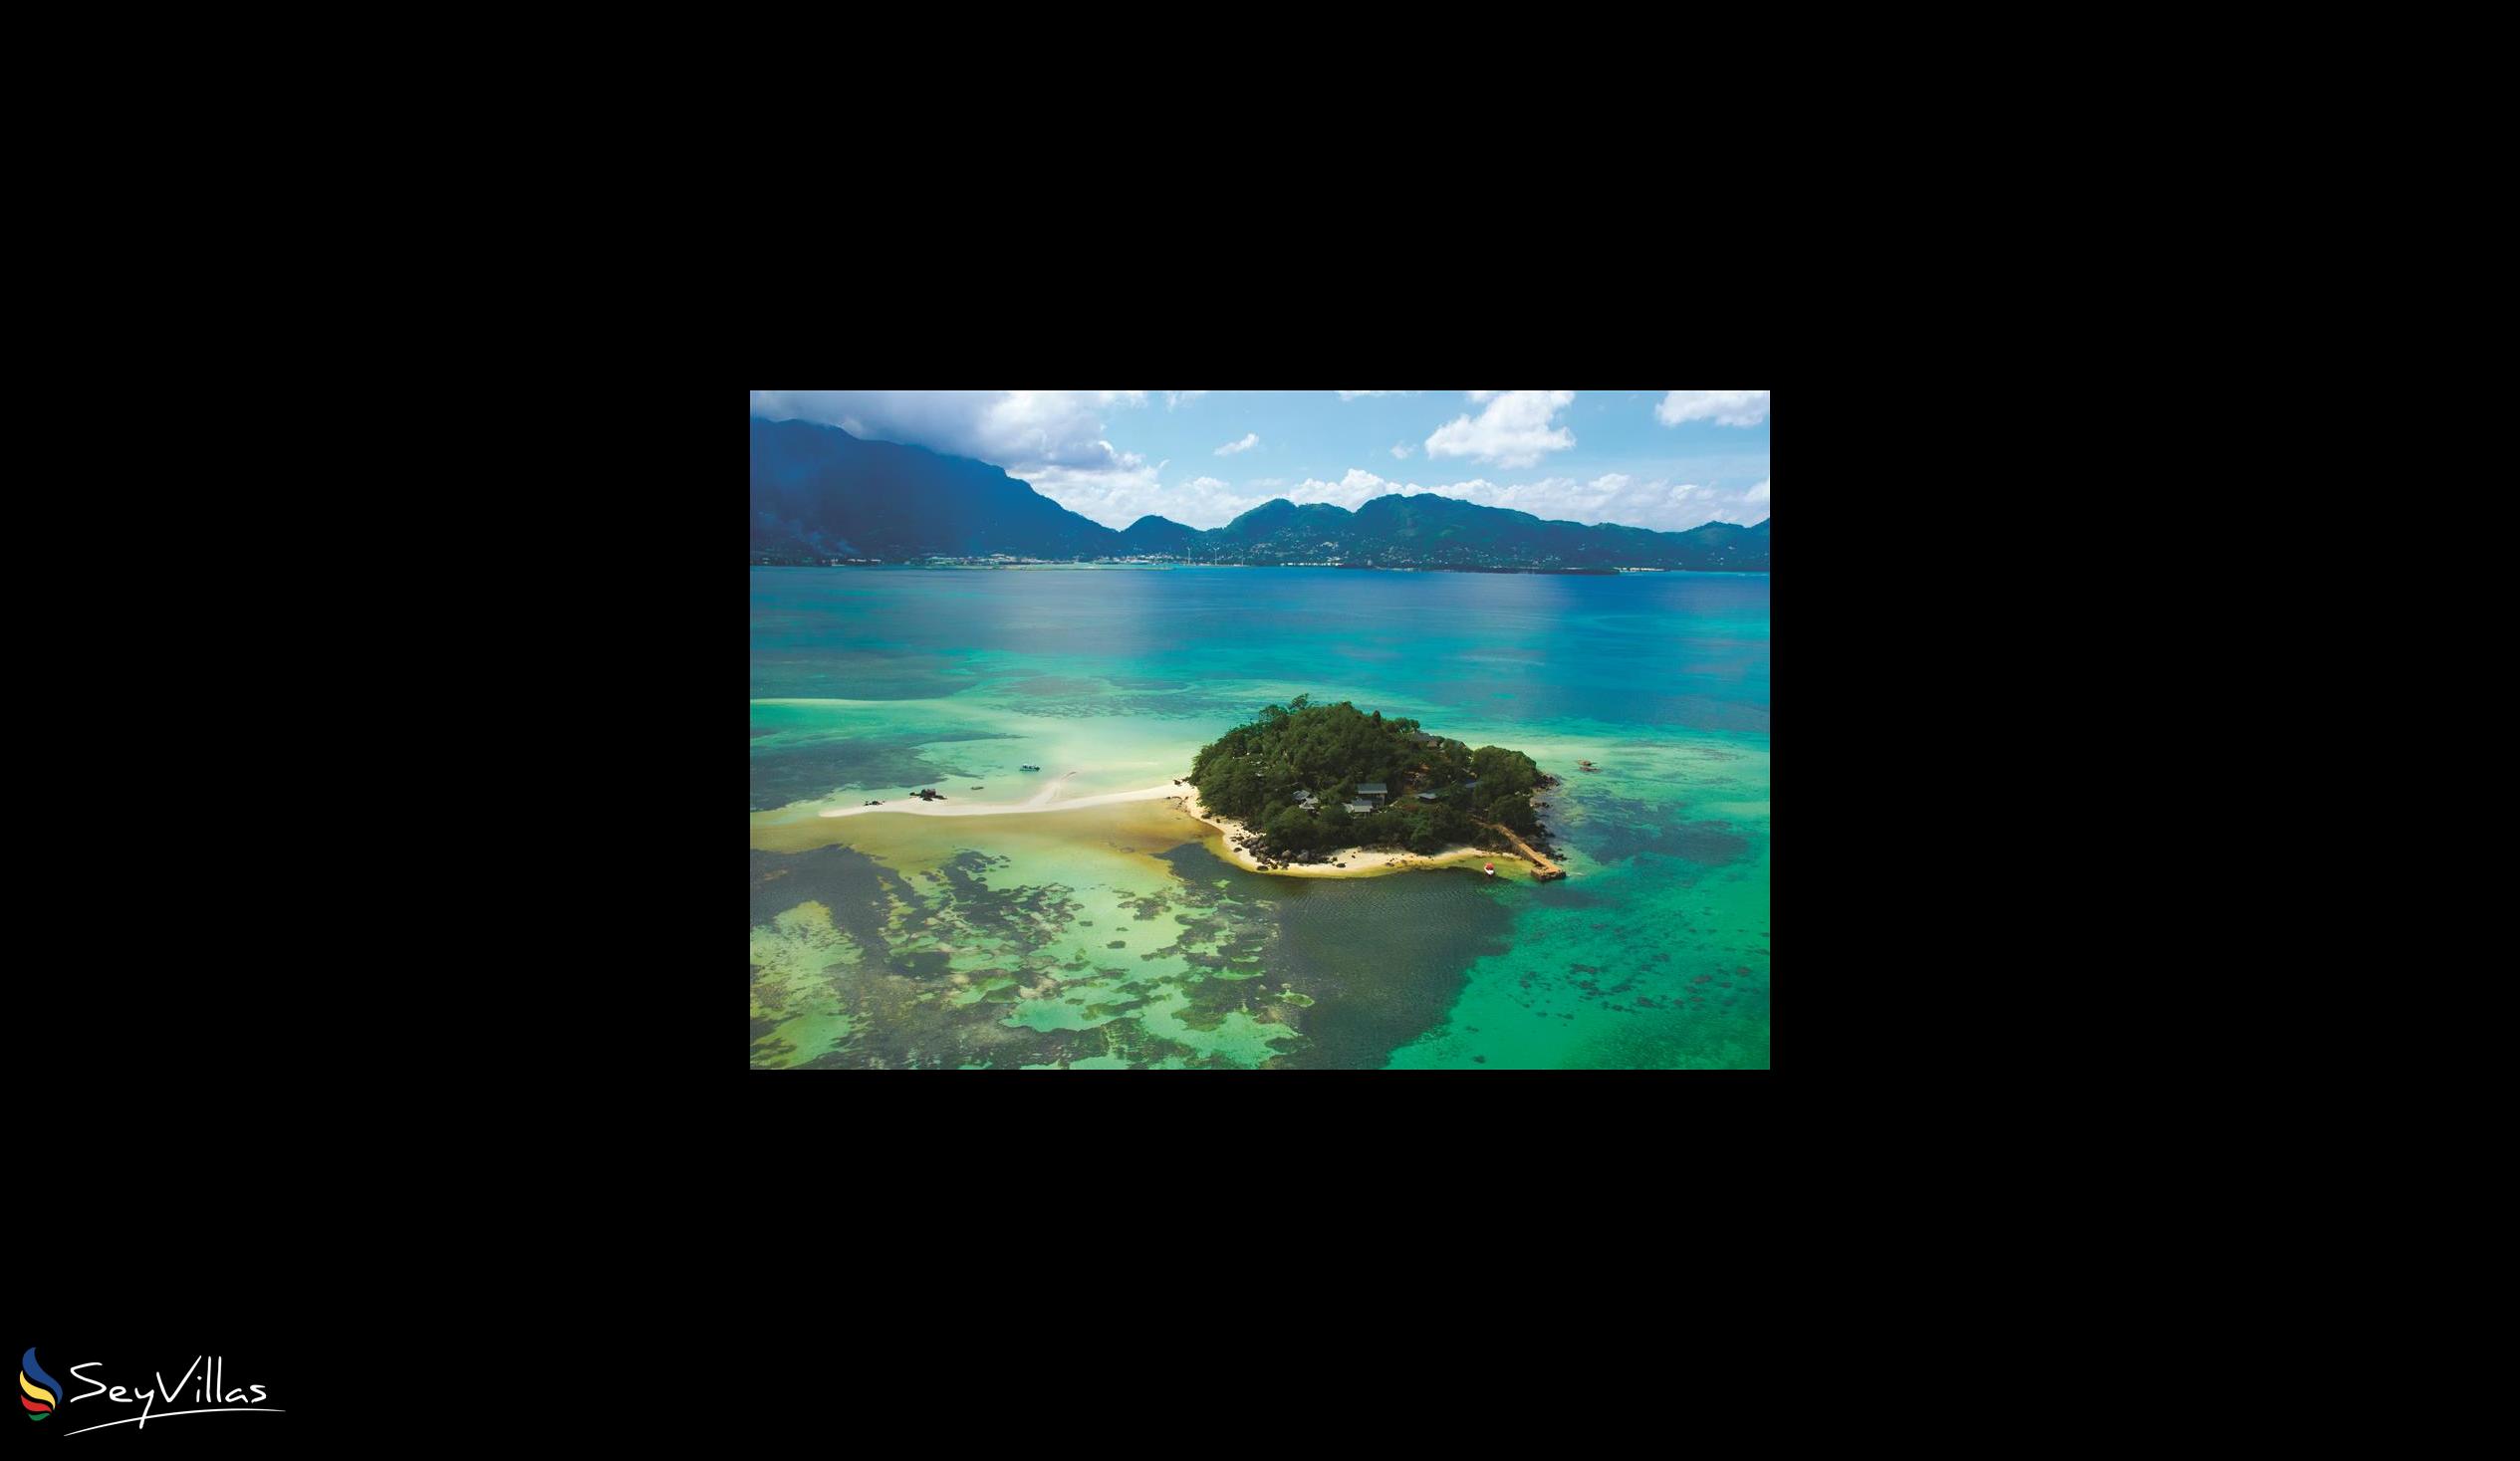 Photo 51: JA Enchanted Island Resort - Location - Round Island (Seychelles)